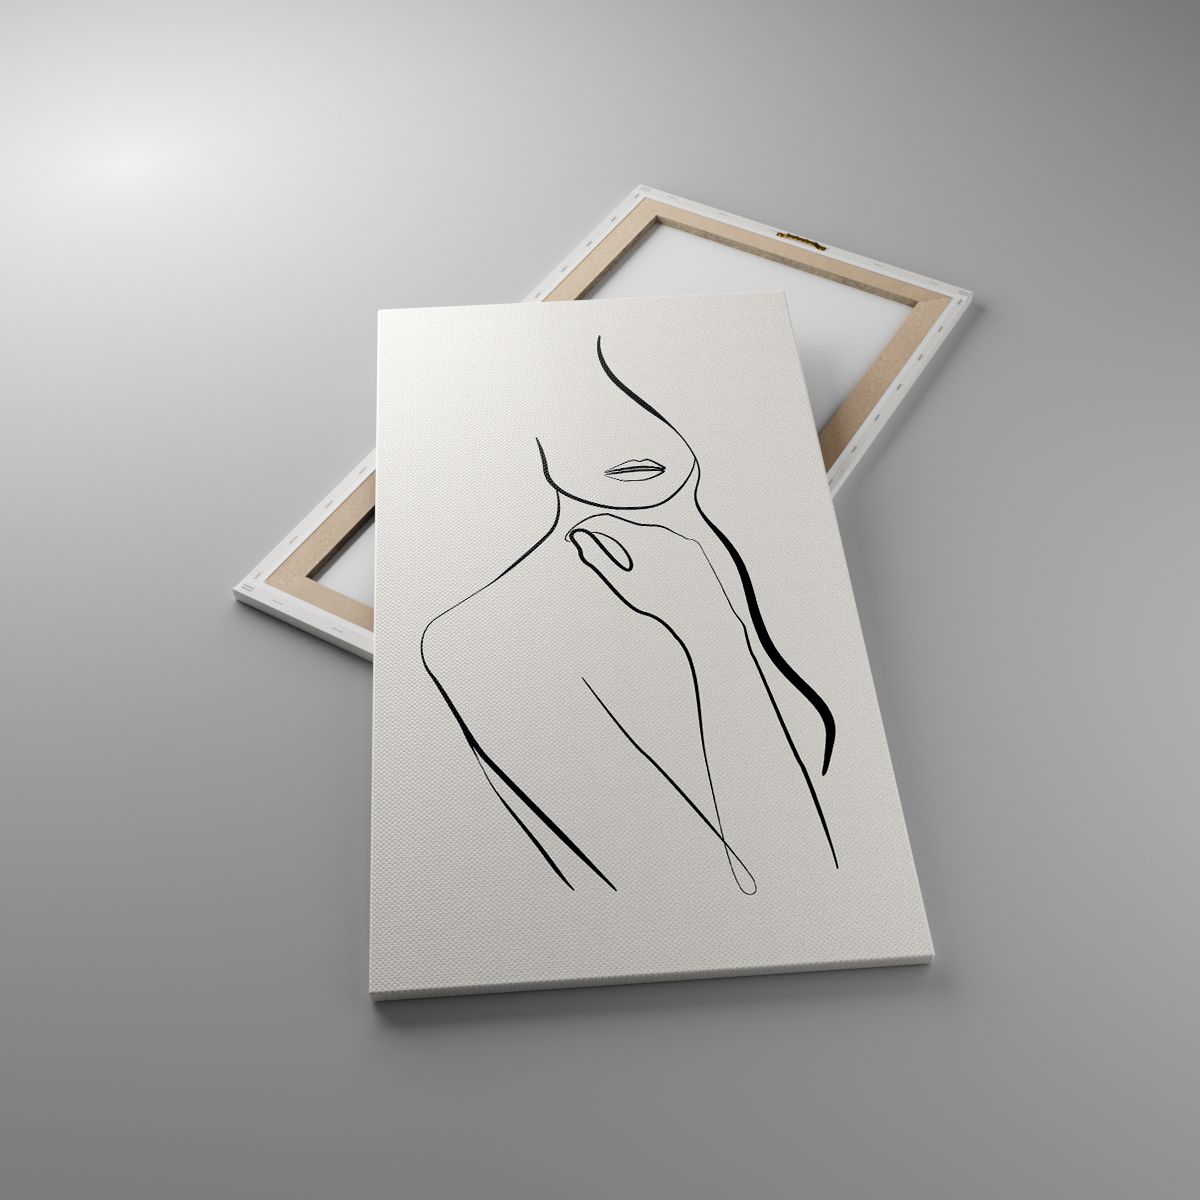 Leinwandbild Abstraktion, Leinwandbild Der Körper Der Frau, Leinwandbild Grafik, Leinwandbild Lineart, Leinwandbild Moderne Kunst